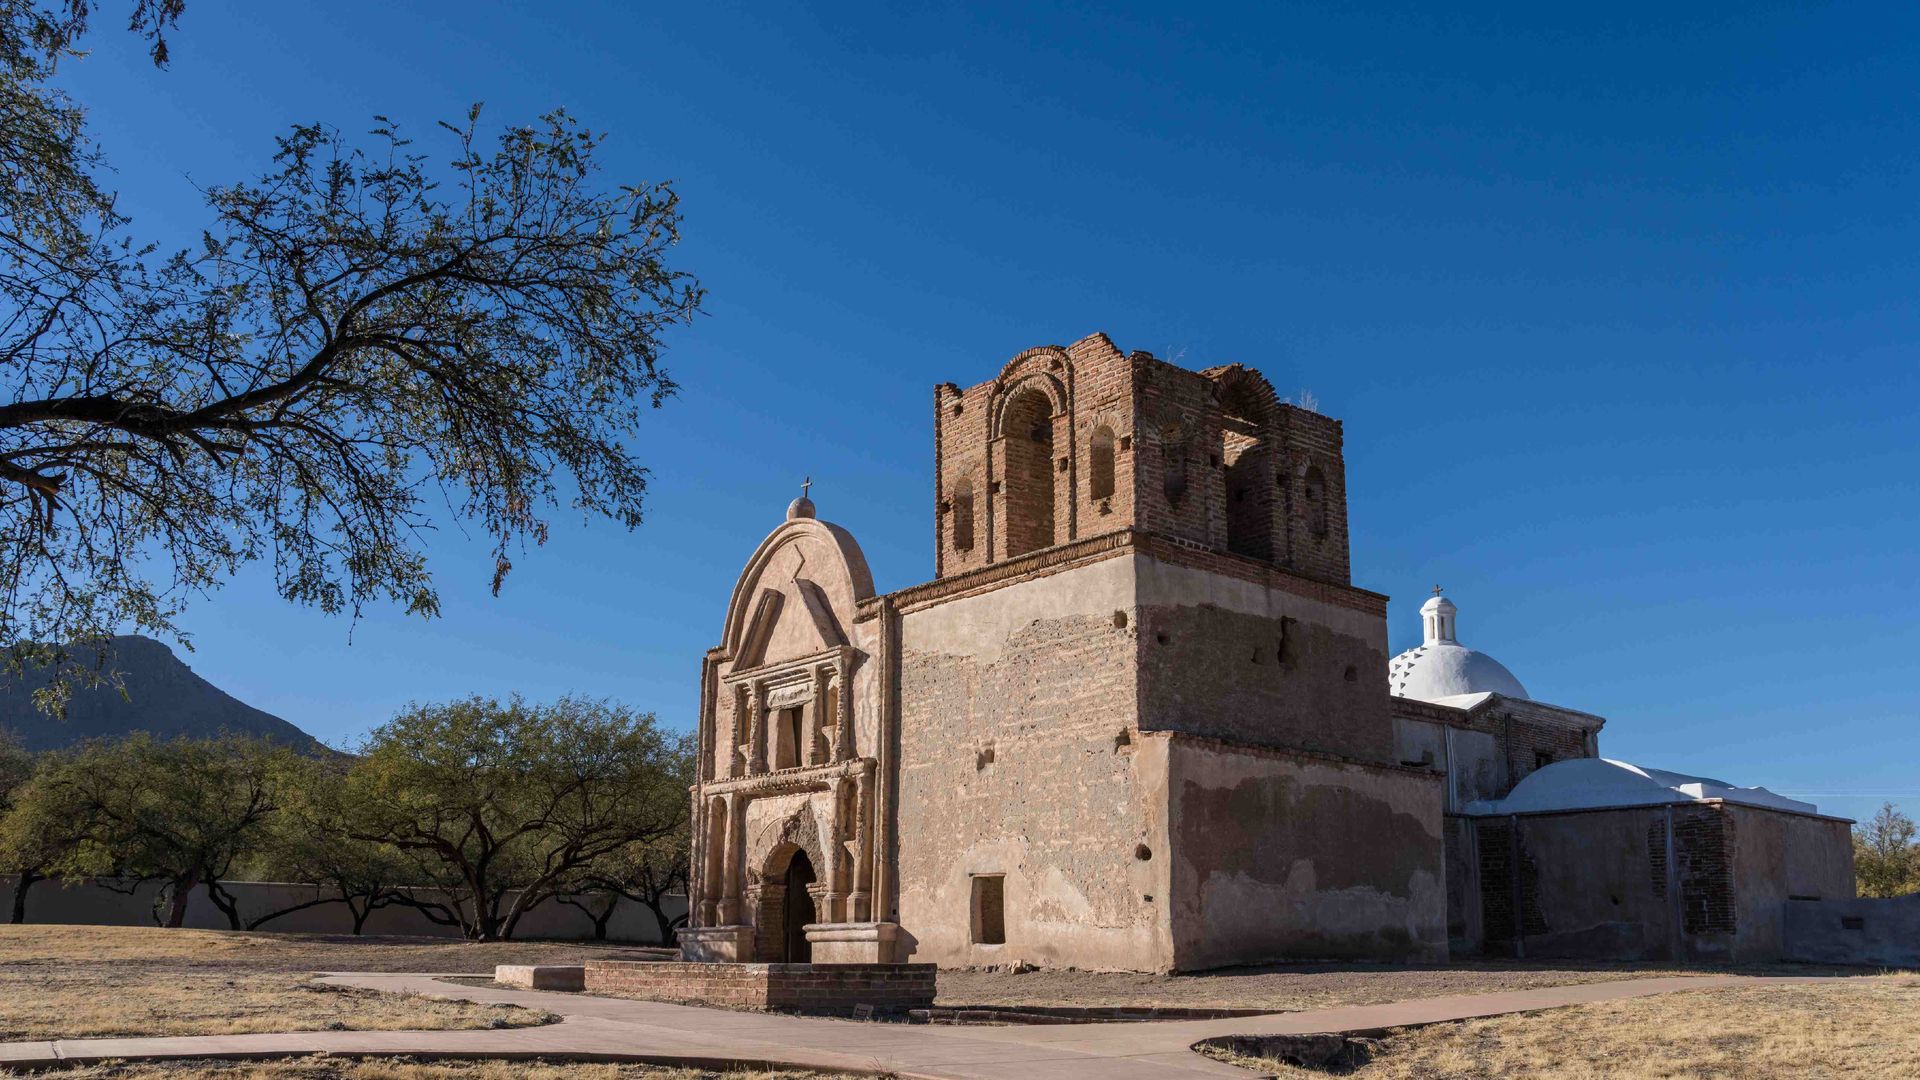 The church of the Mission San Jose de Tumacacori. Tumacacori National Historical Park.